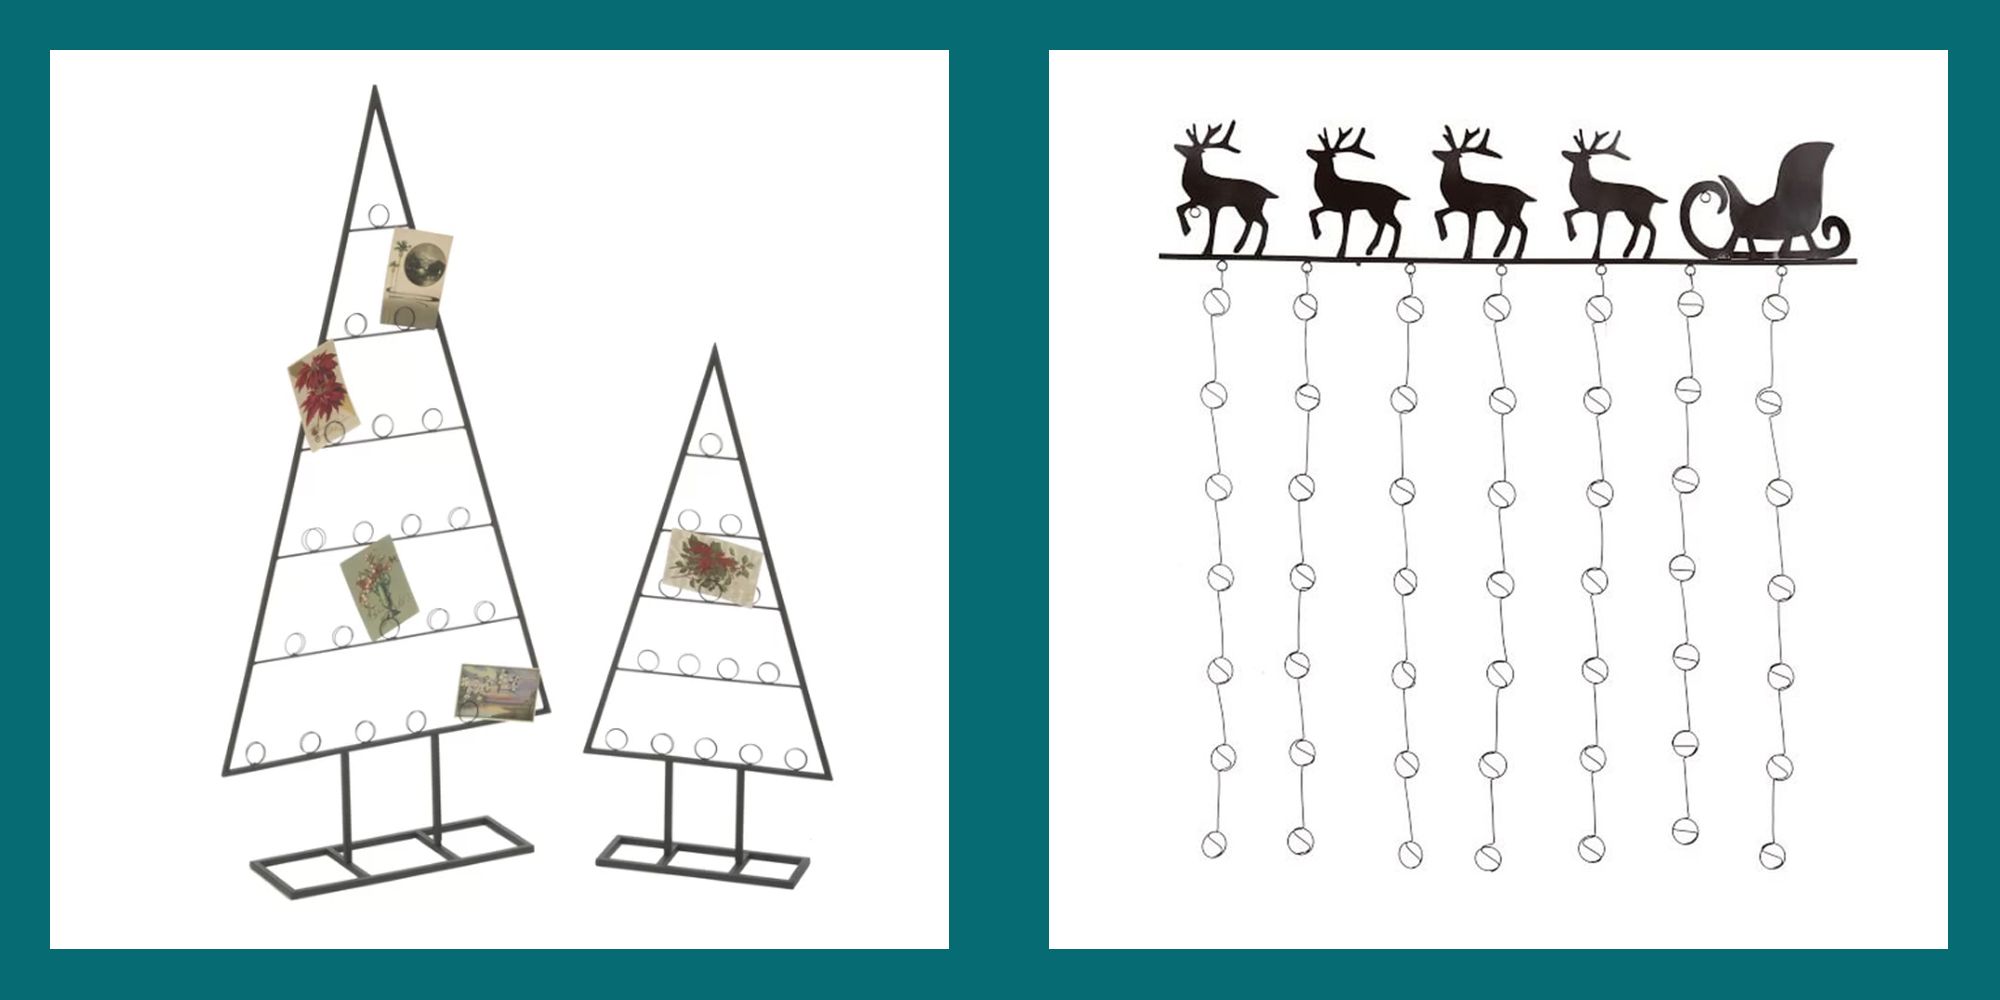 Peer hengel album 20+ Stylish Christmas Card Holders 2019 - Best Holders for Holiday Cards